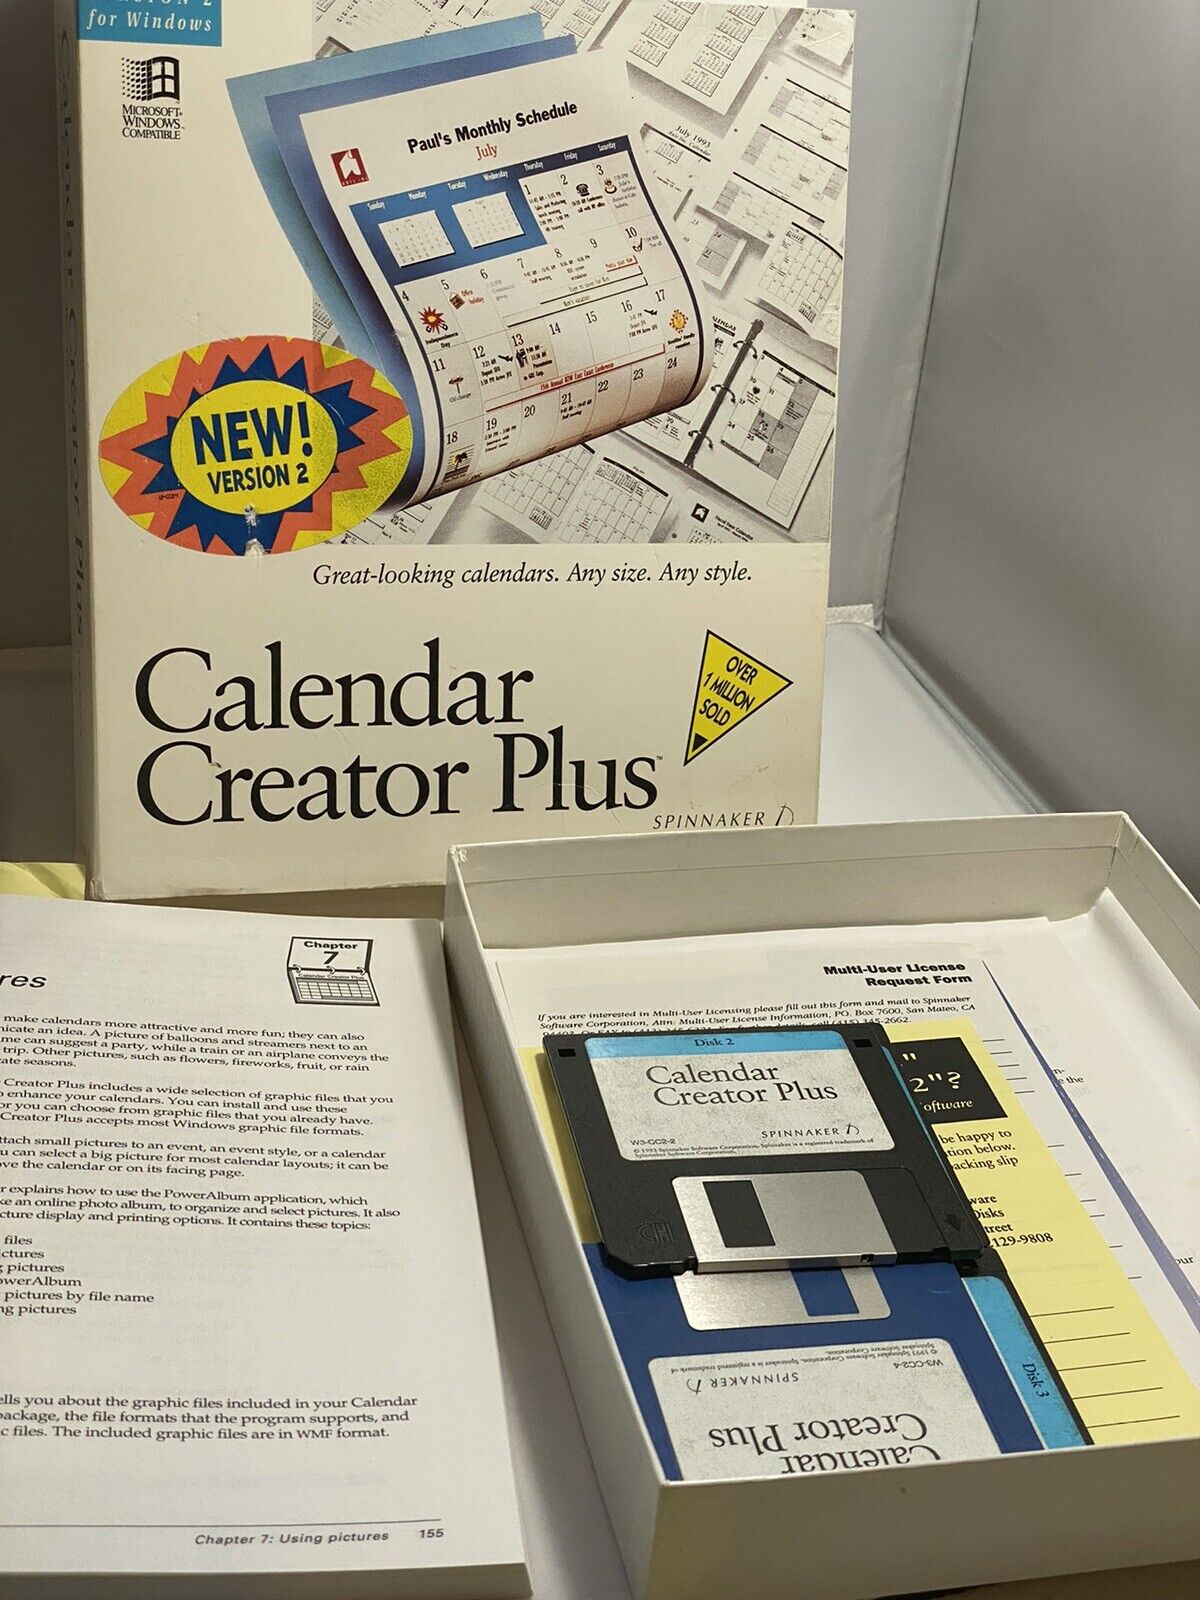 Vintage Spinnaker Calendar Creator Plus Version 2 for Windows 95 & Windows 3.1